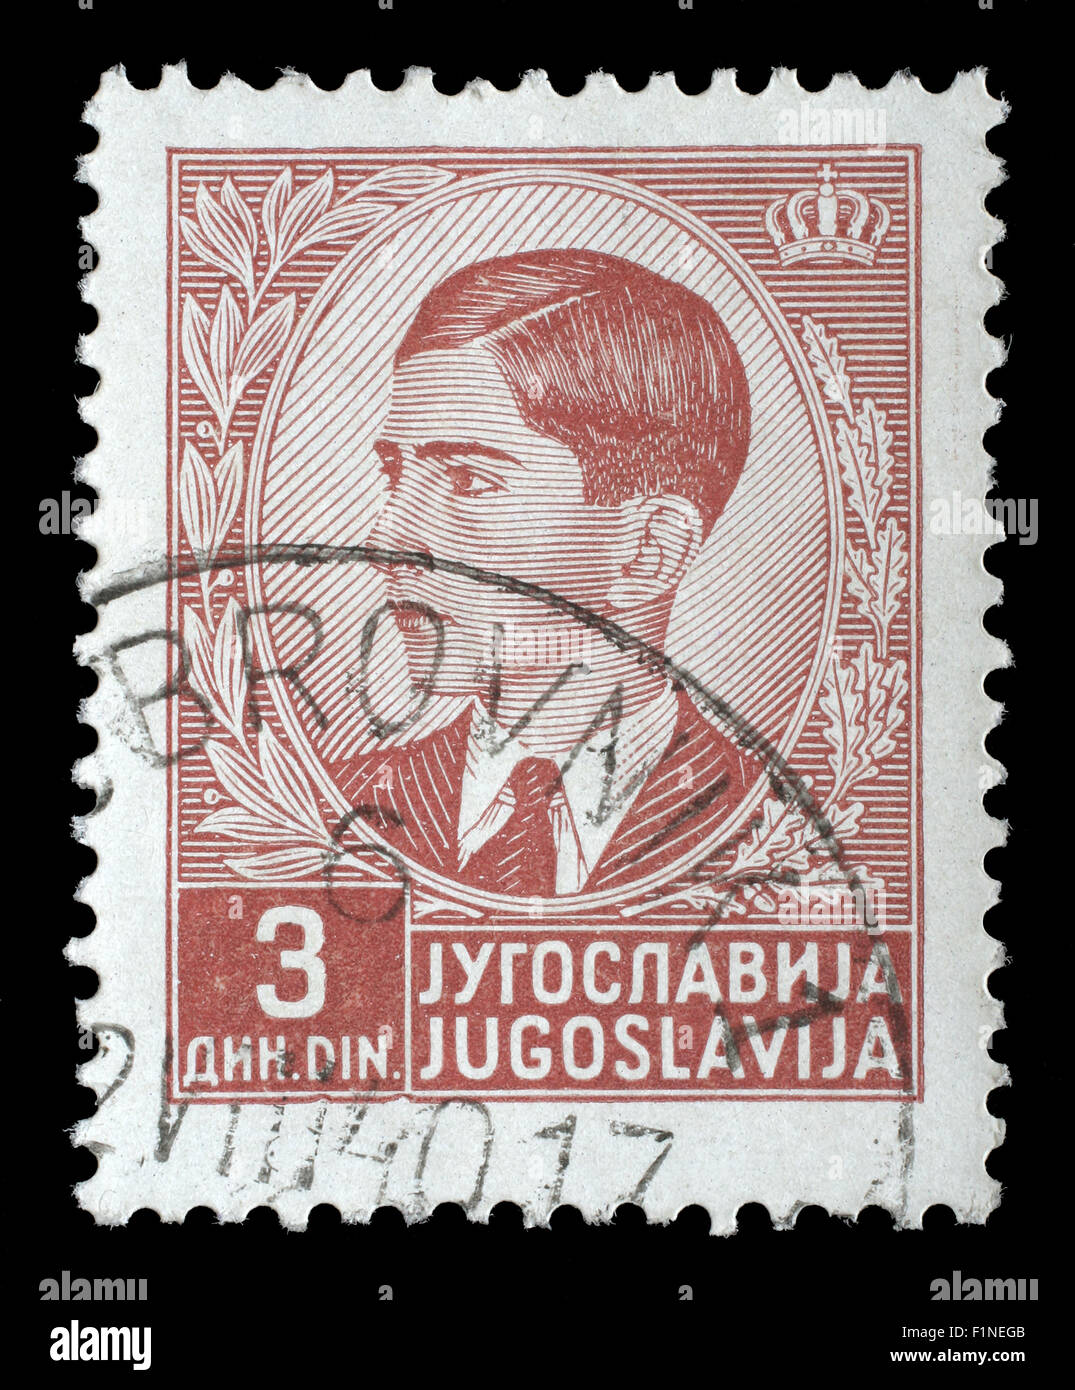 Stamp printed in Yugoslavia shows King Peter II, circa 1939. Stock Photo